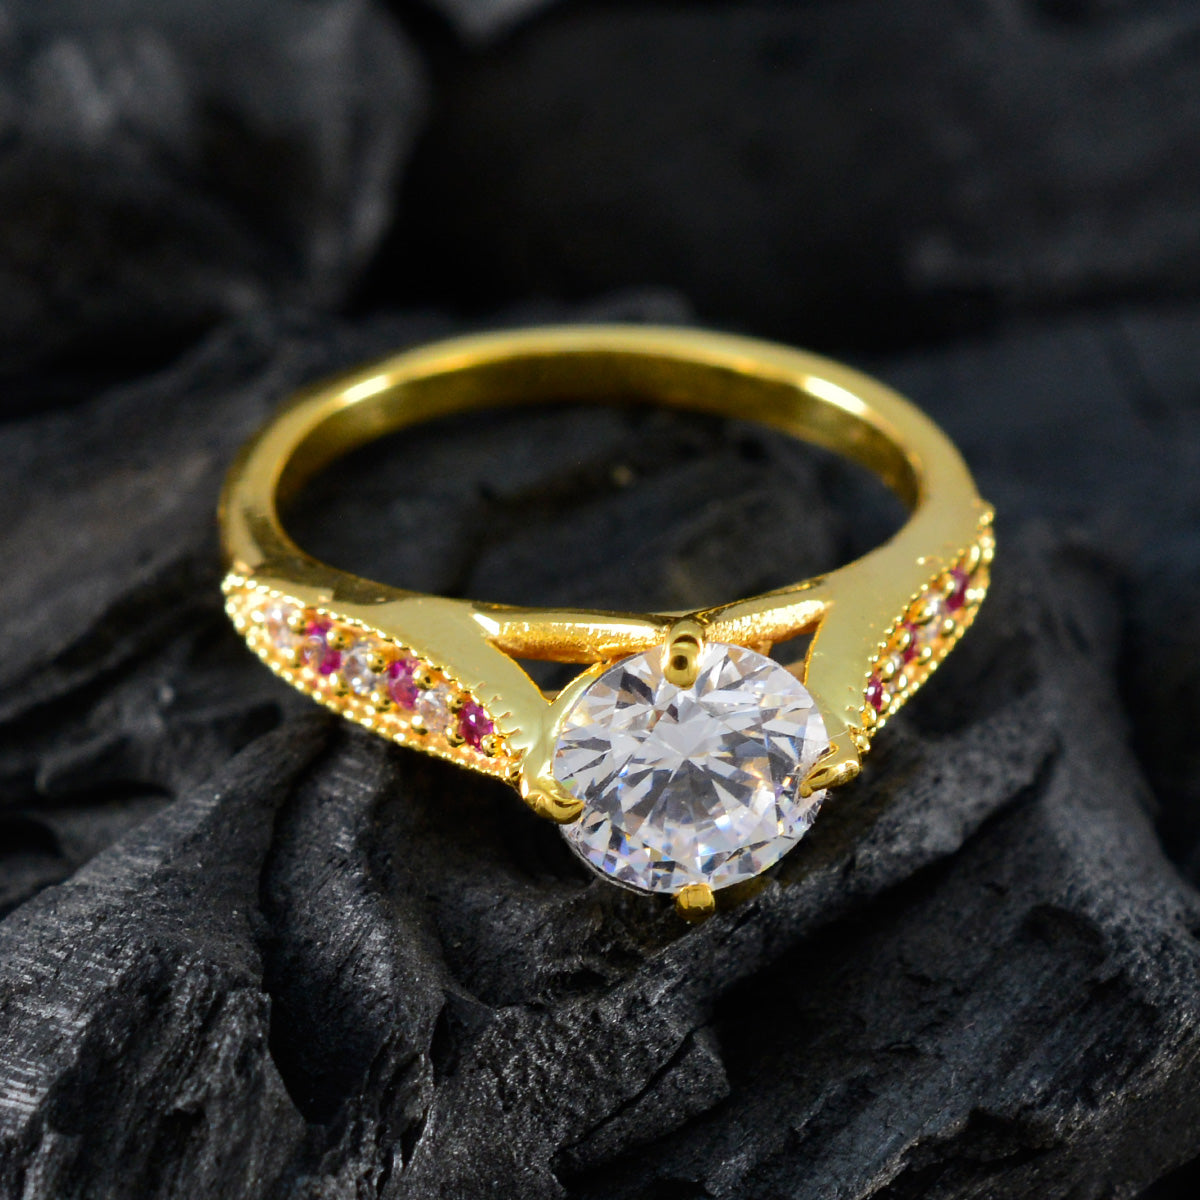 Encantador anillo de plata riyo con anillo de compromiso con forma redonda de piedra de rubí cz chapado en oro amarillo